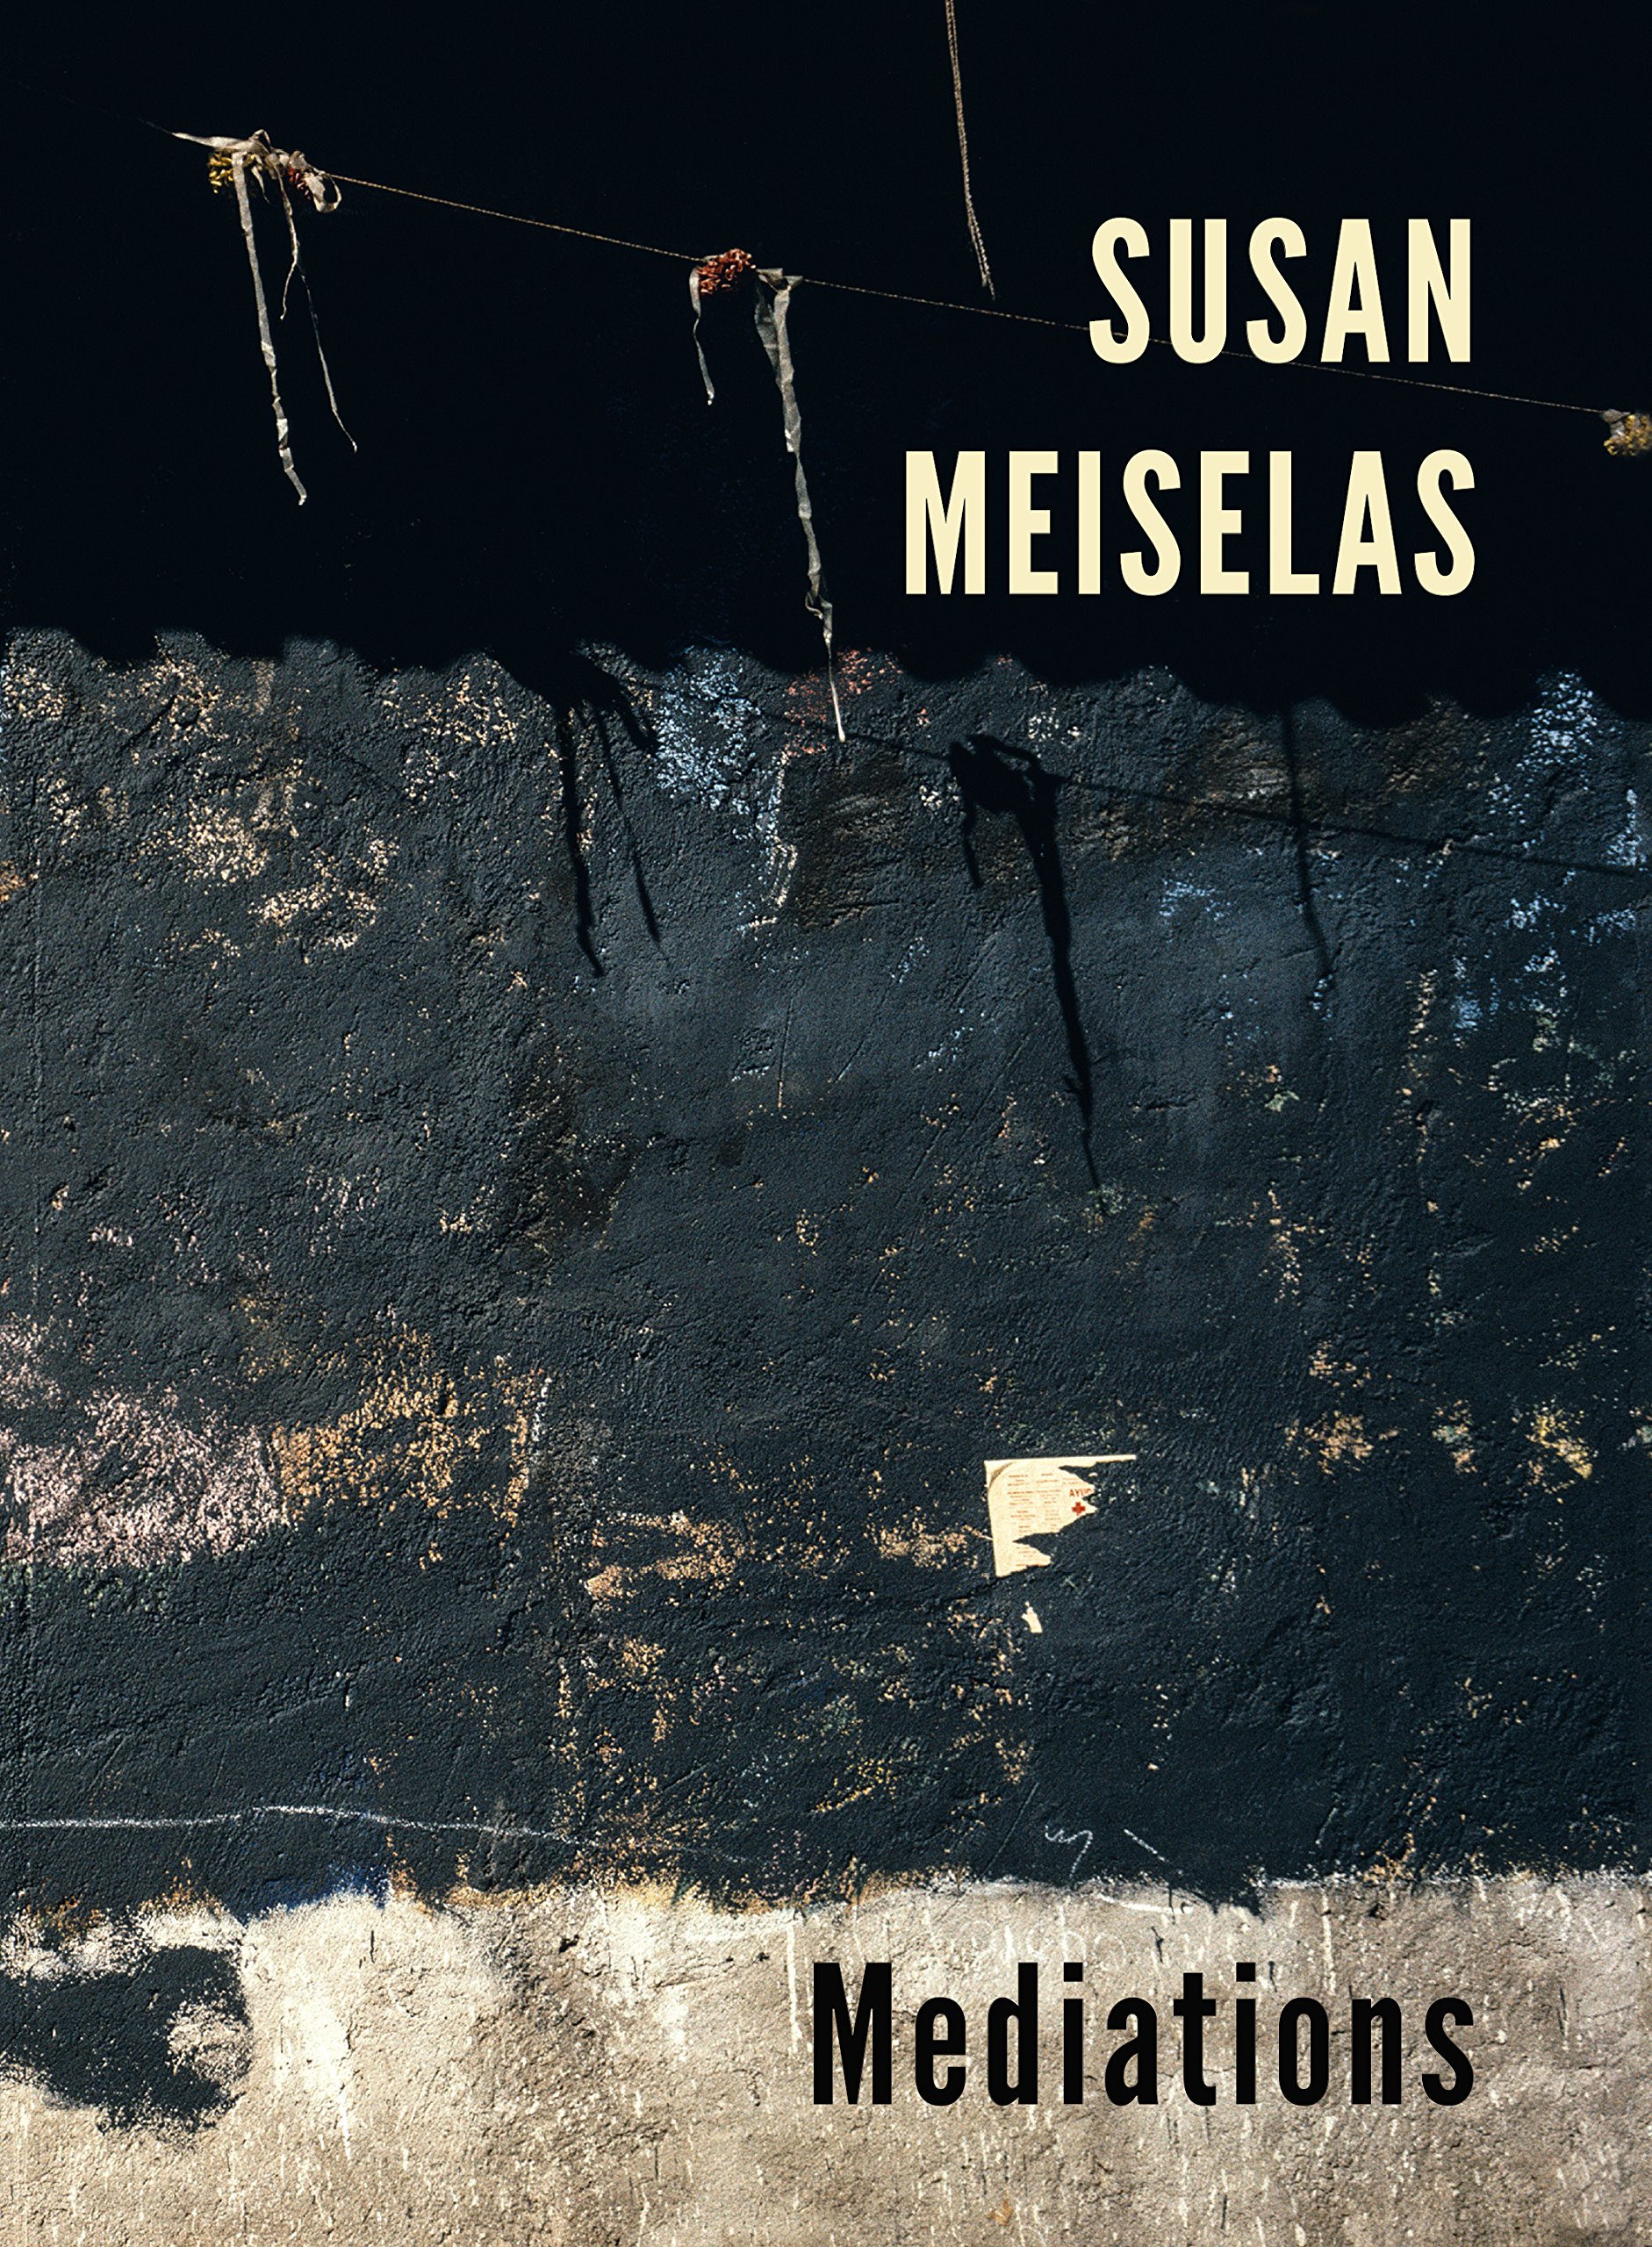 Susan Meiselas (English edition) | Susan Meiselas